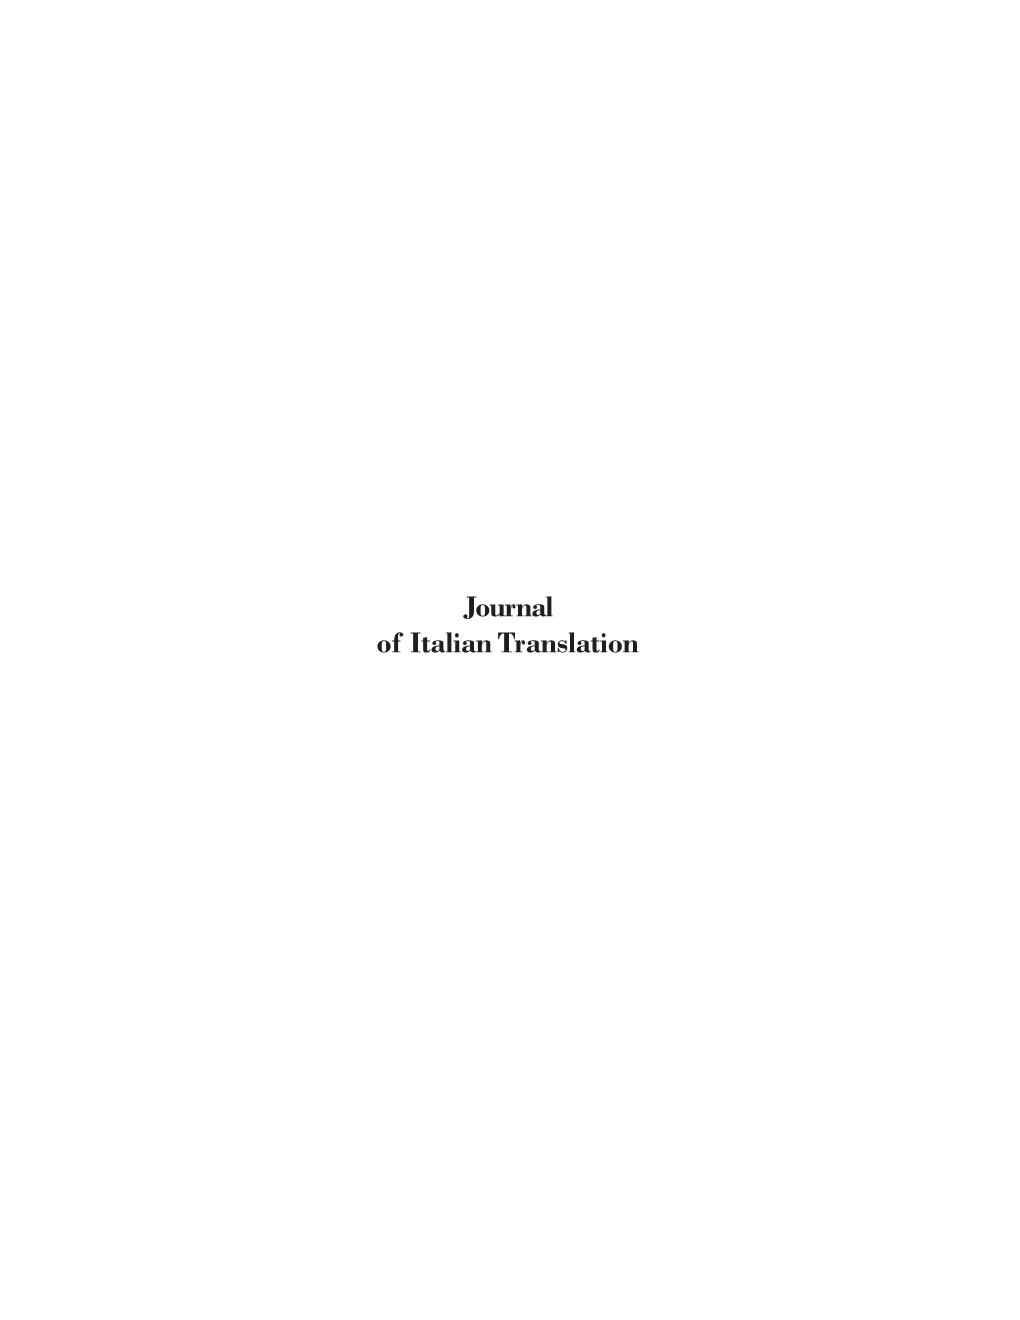 2006 by Journal of Italian Translation Journal of Italian Translation